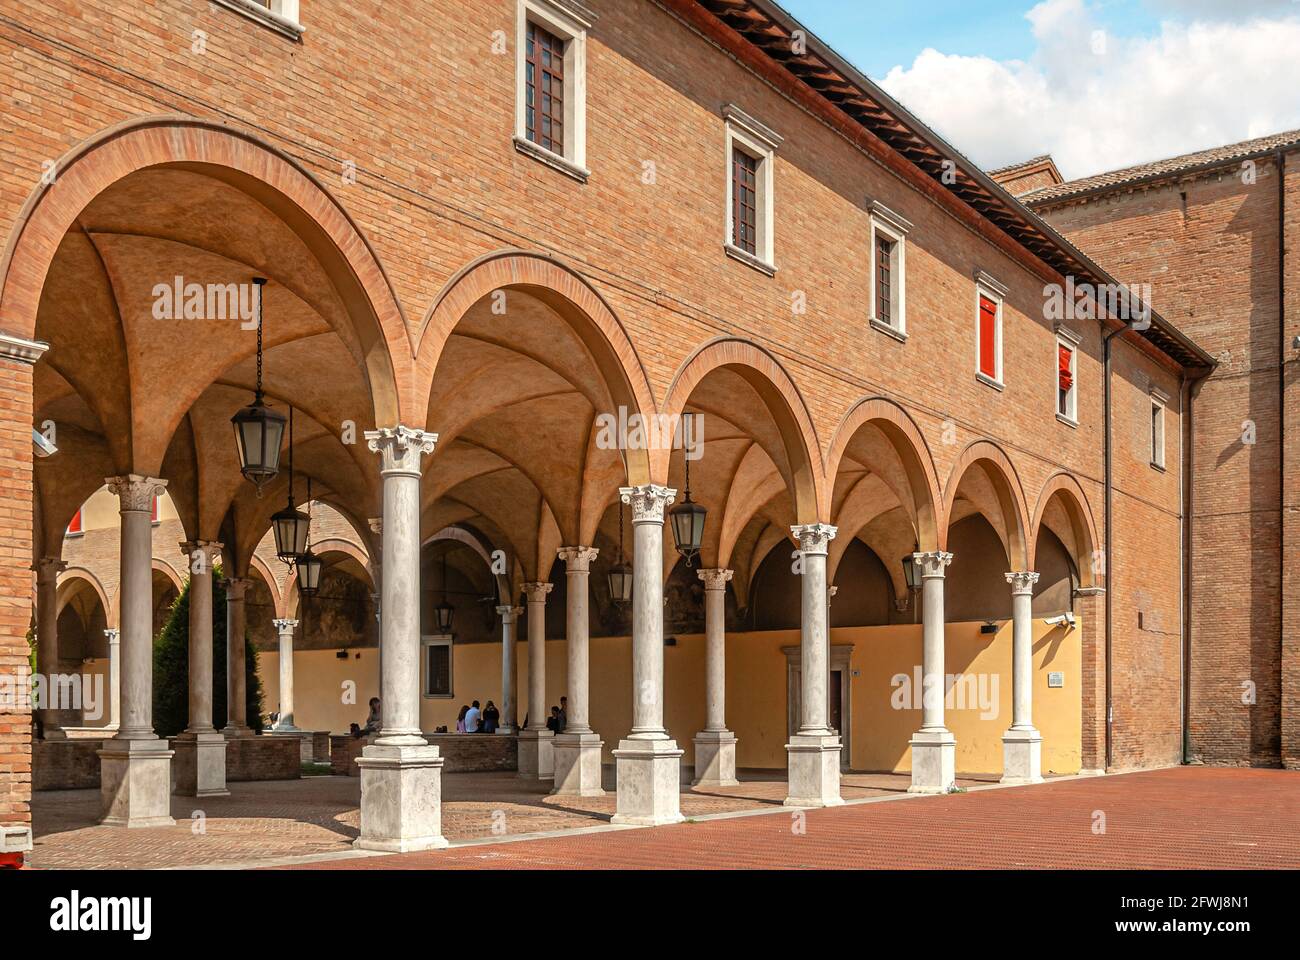 The Abbey of San Mercuriale in Forli, Emilia Romagna, Italy Stock Photo